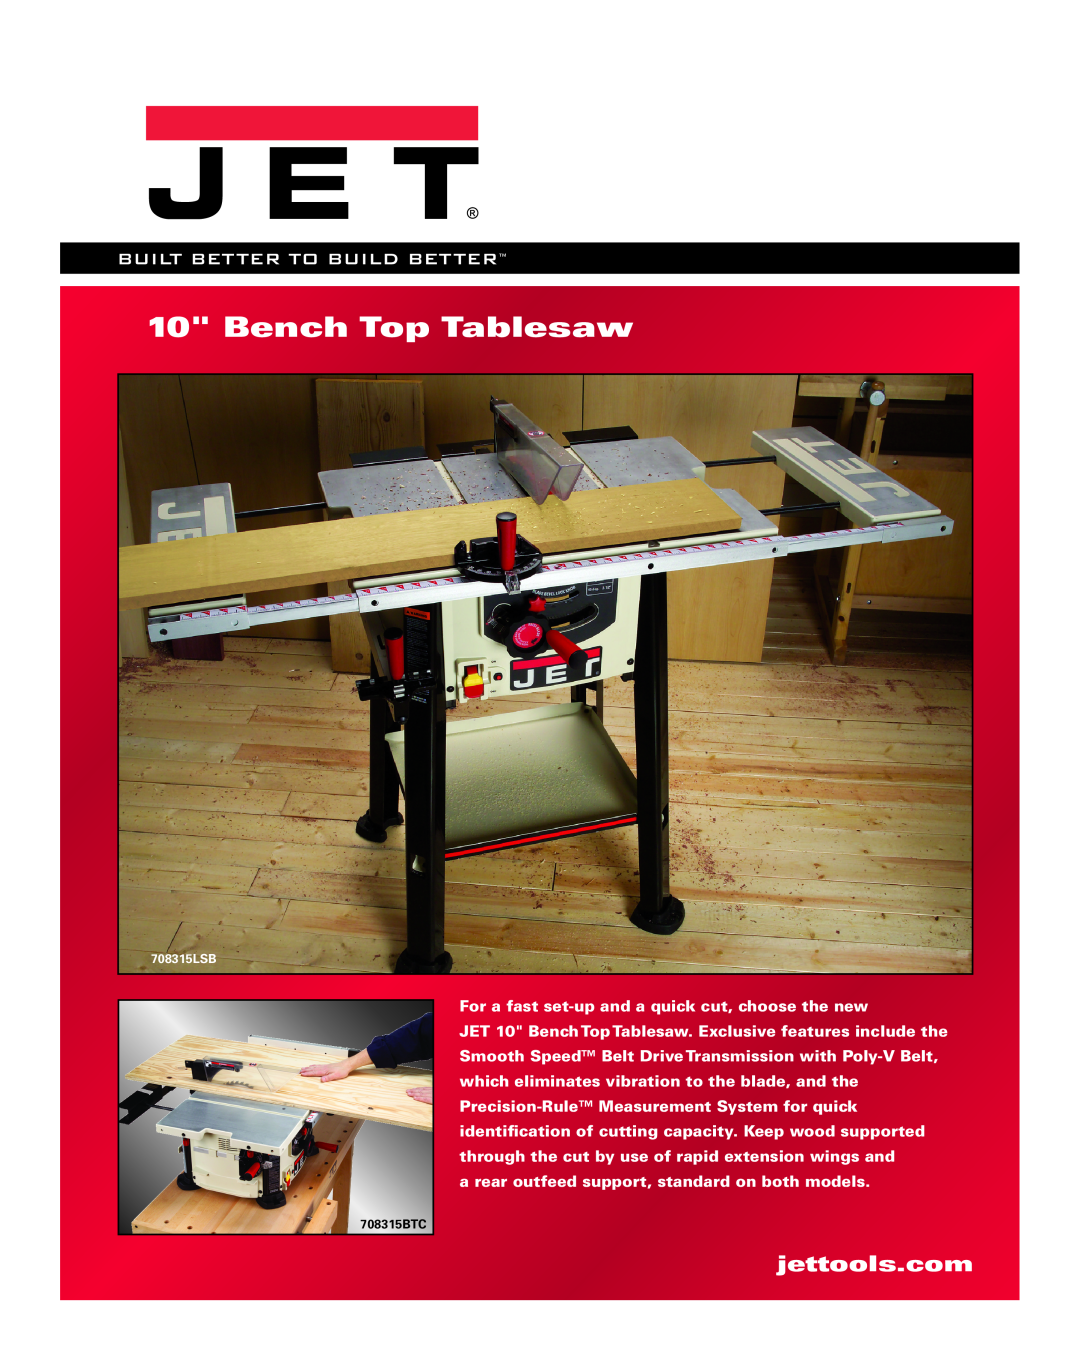 Jet Tools JBTS-10LS-2, JBTS-10BT-3 manual Bench Top Tablesaw, jettools.com, Built Better To Build Better 